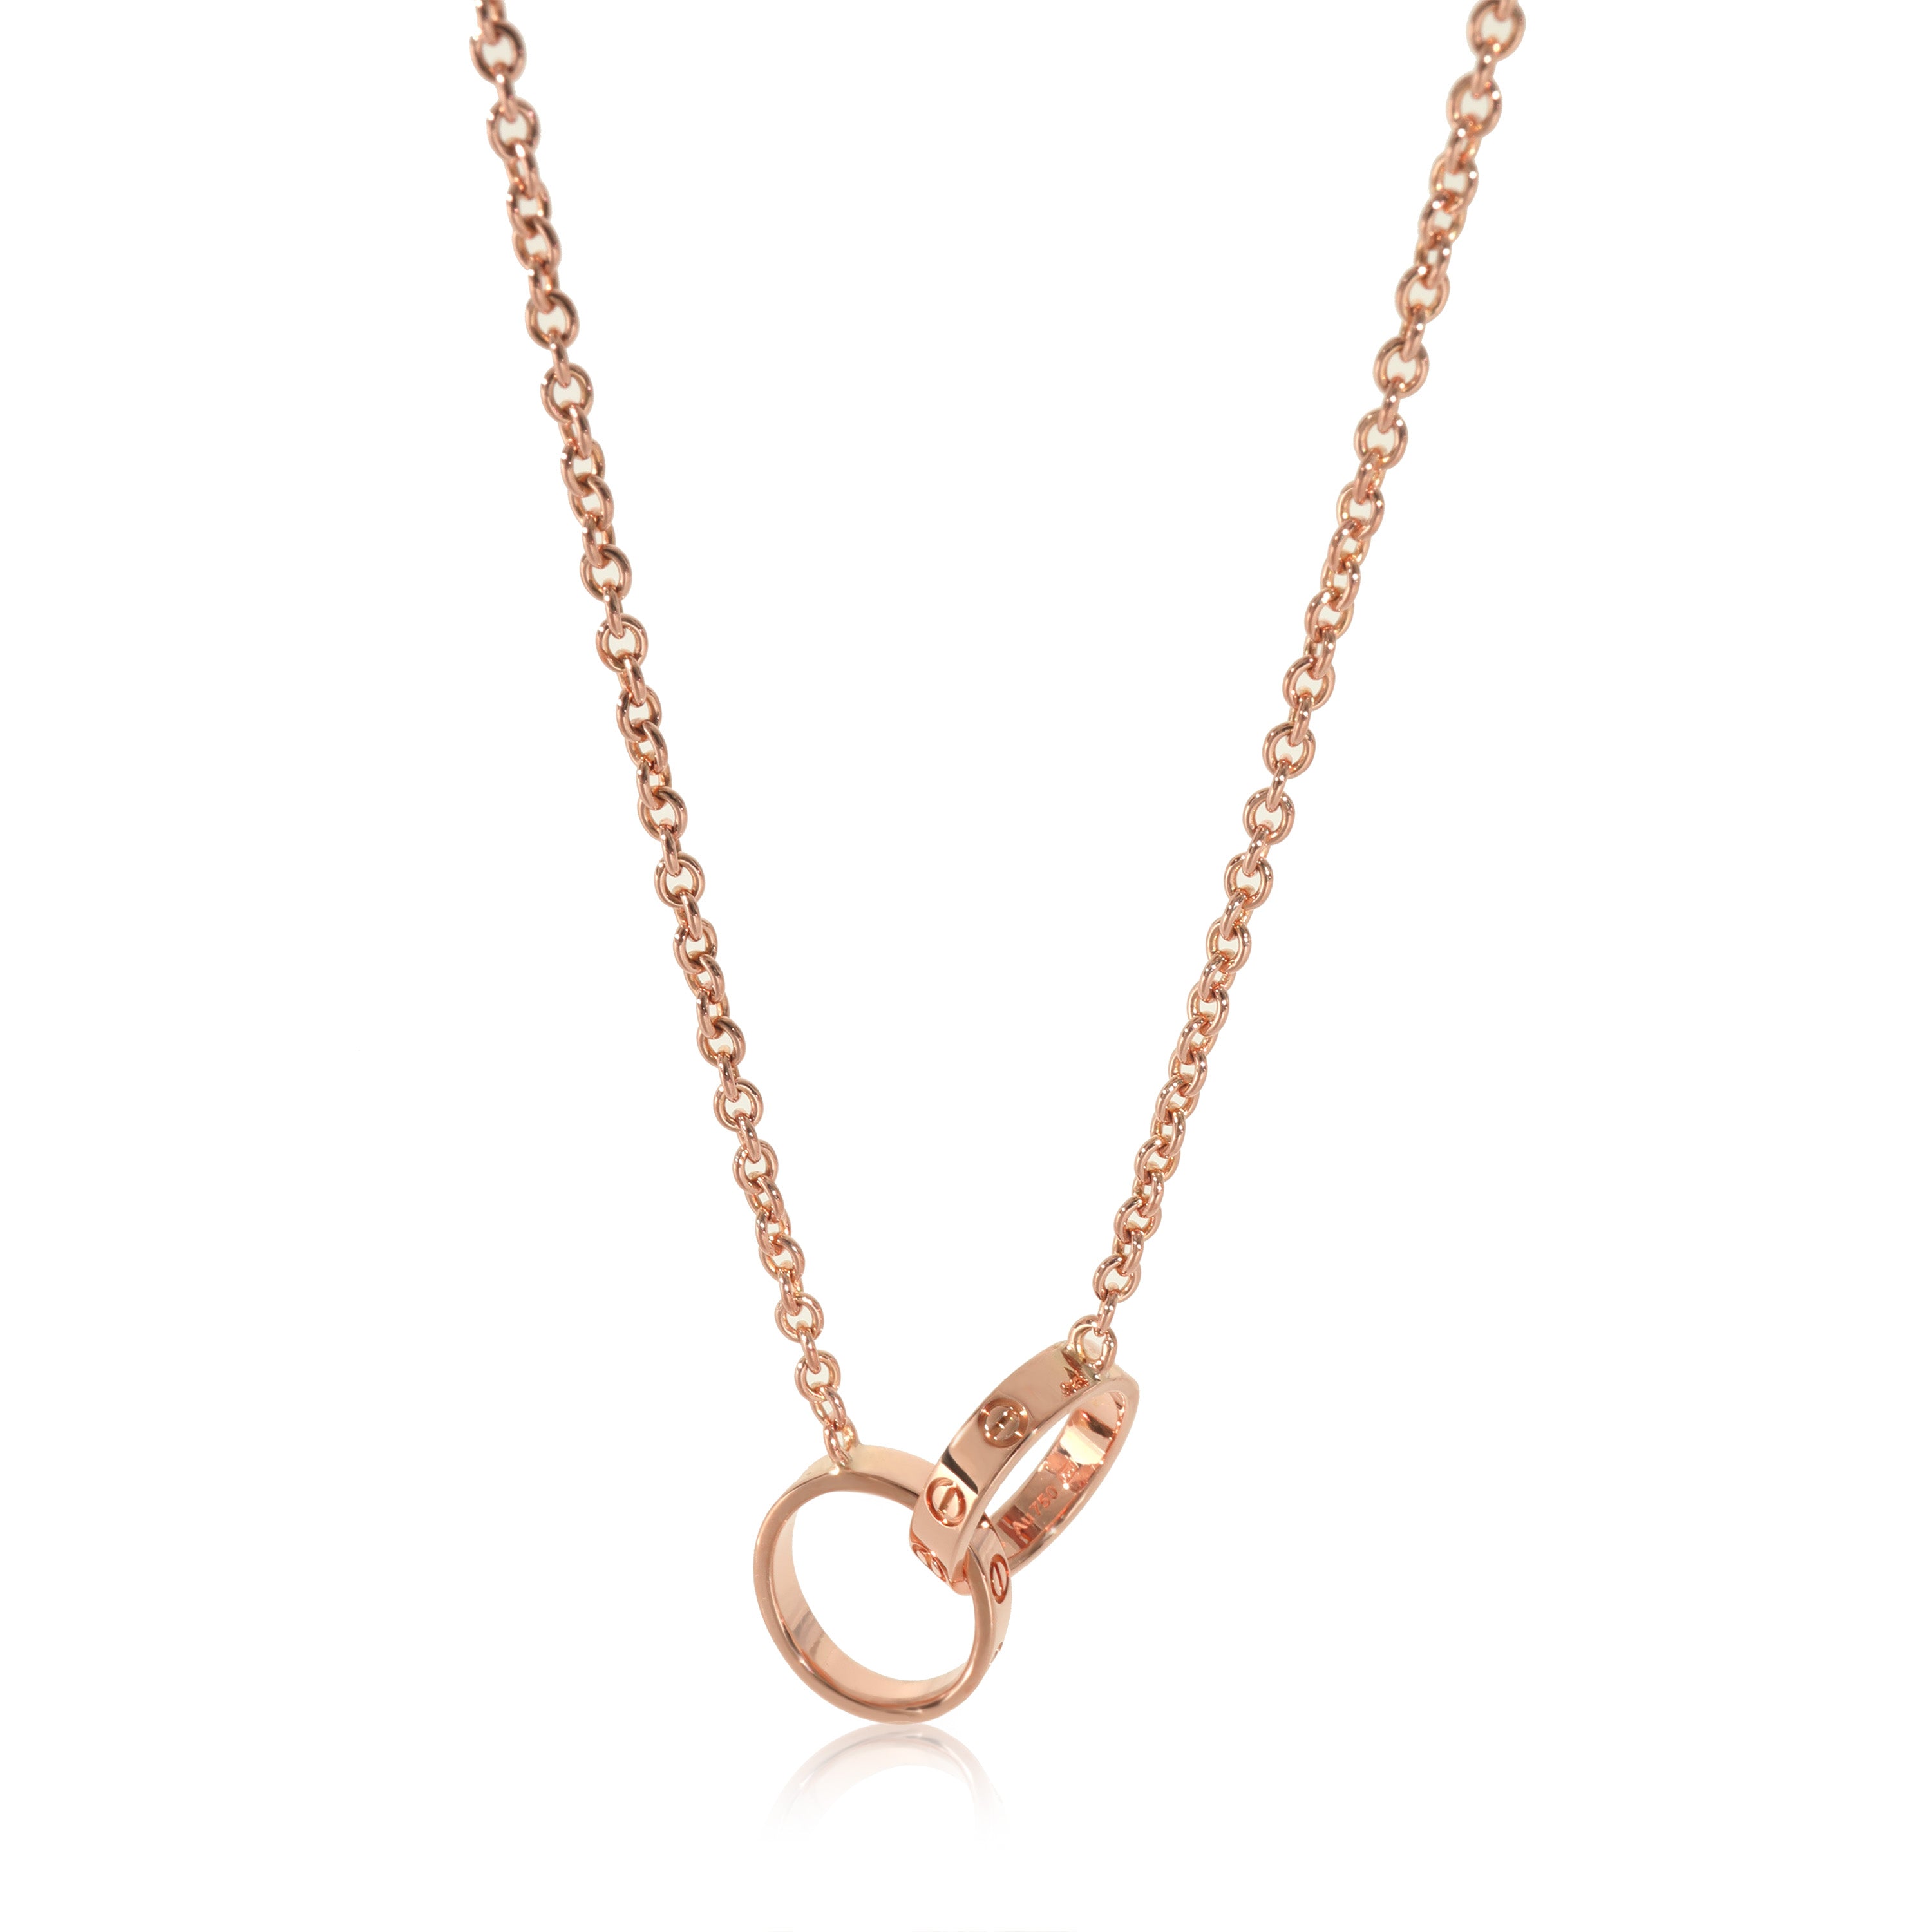 Cartier d'Amour Necklace with Pendant 18k Rose Gold Diamond 0.04 ctw for  sale online | eBay